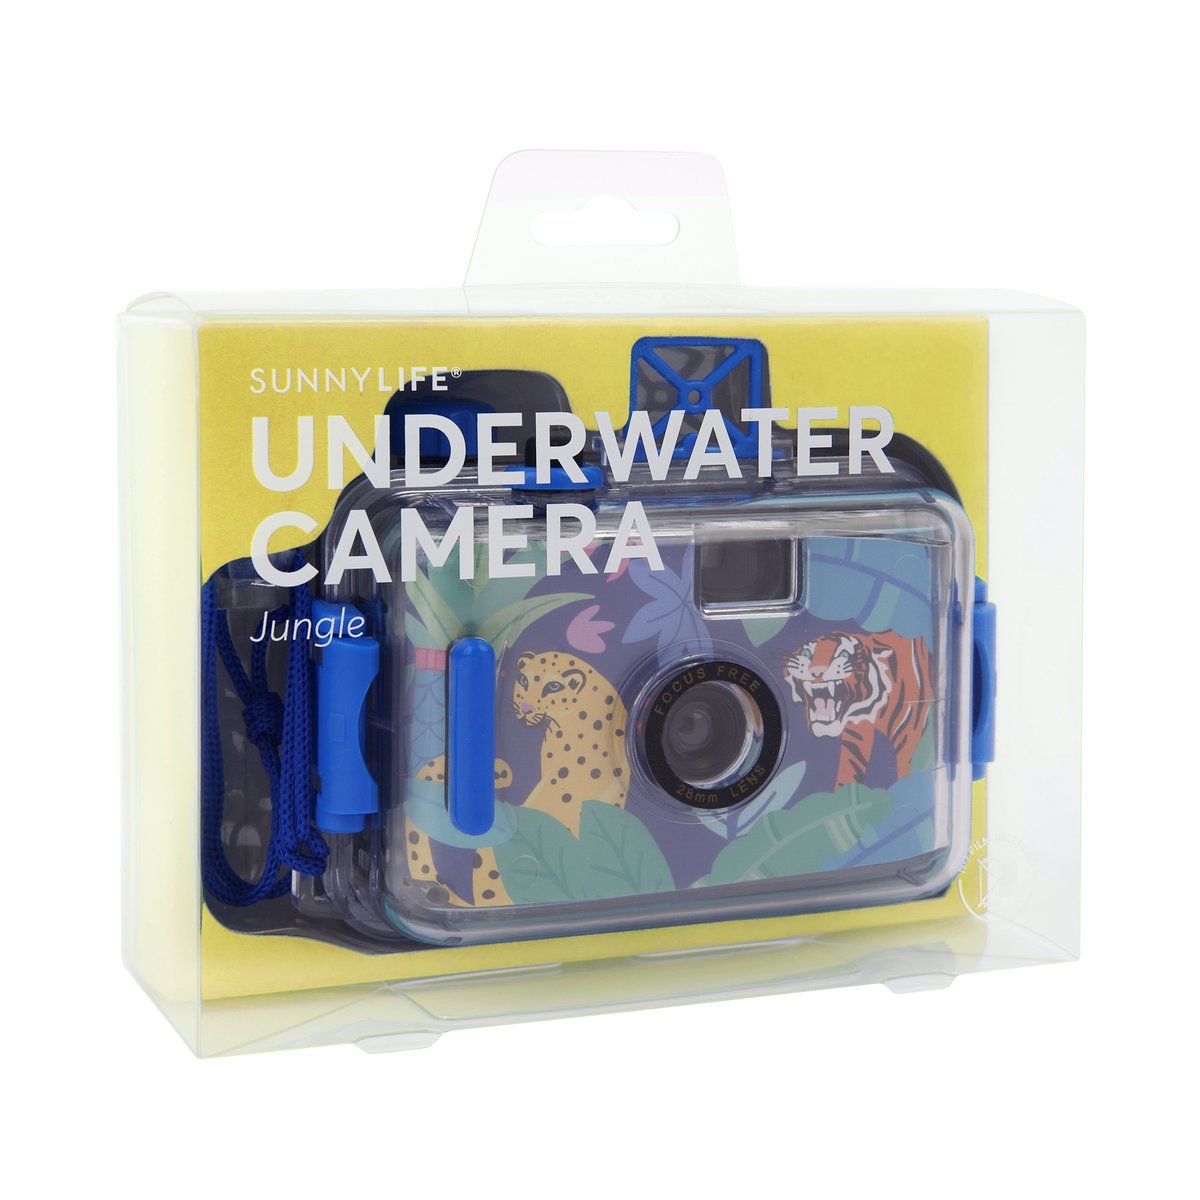 Underwater Camera - Jungle